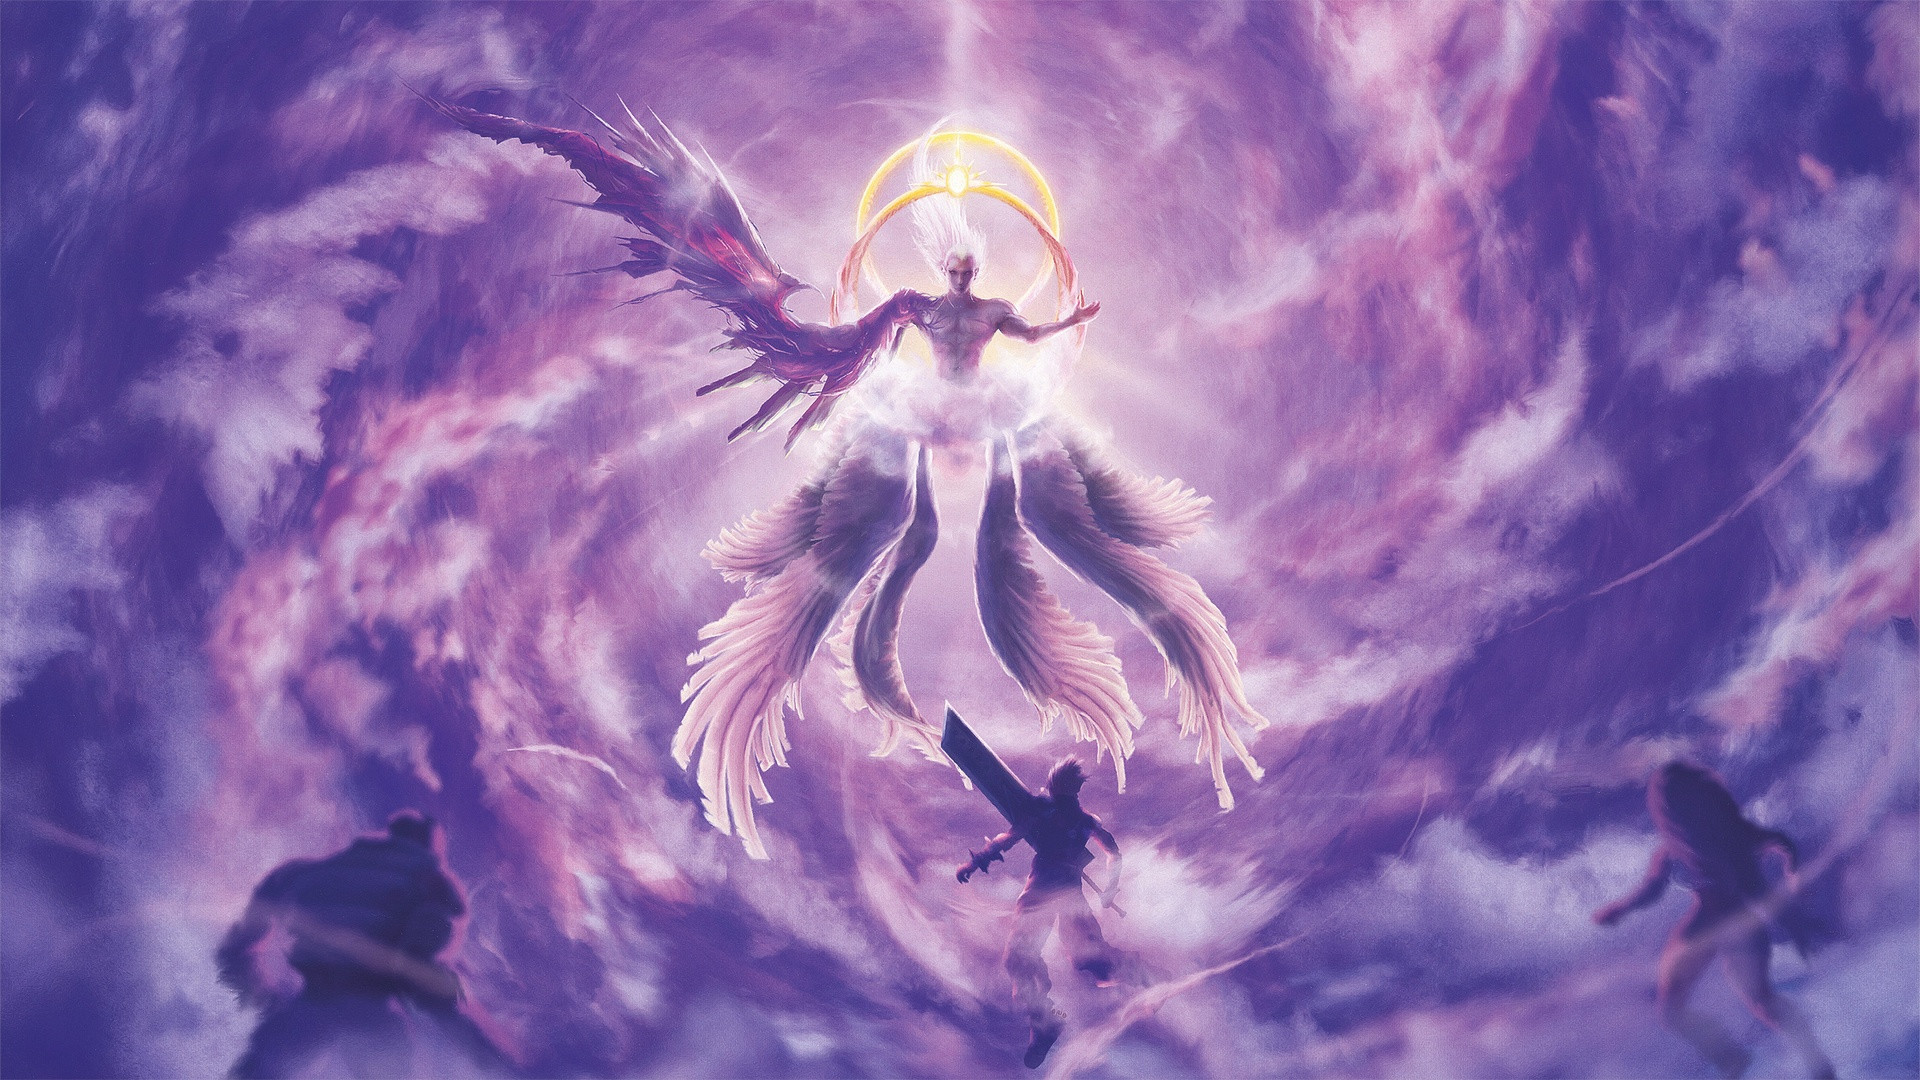 1920x1080 Final Fantasy VII Â· Sephiroth (Final Fantasy) Â· Tifa Lockhart Â· Wallpapers  ID:863433